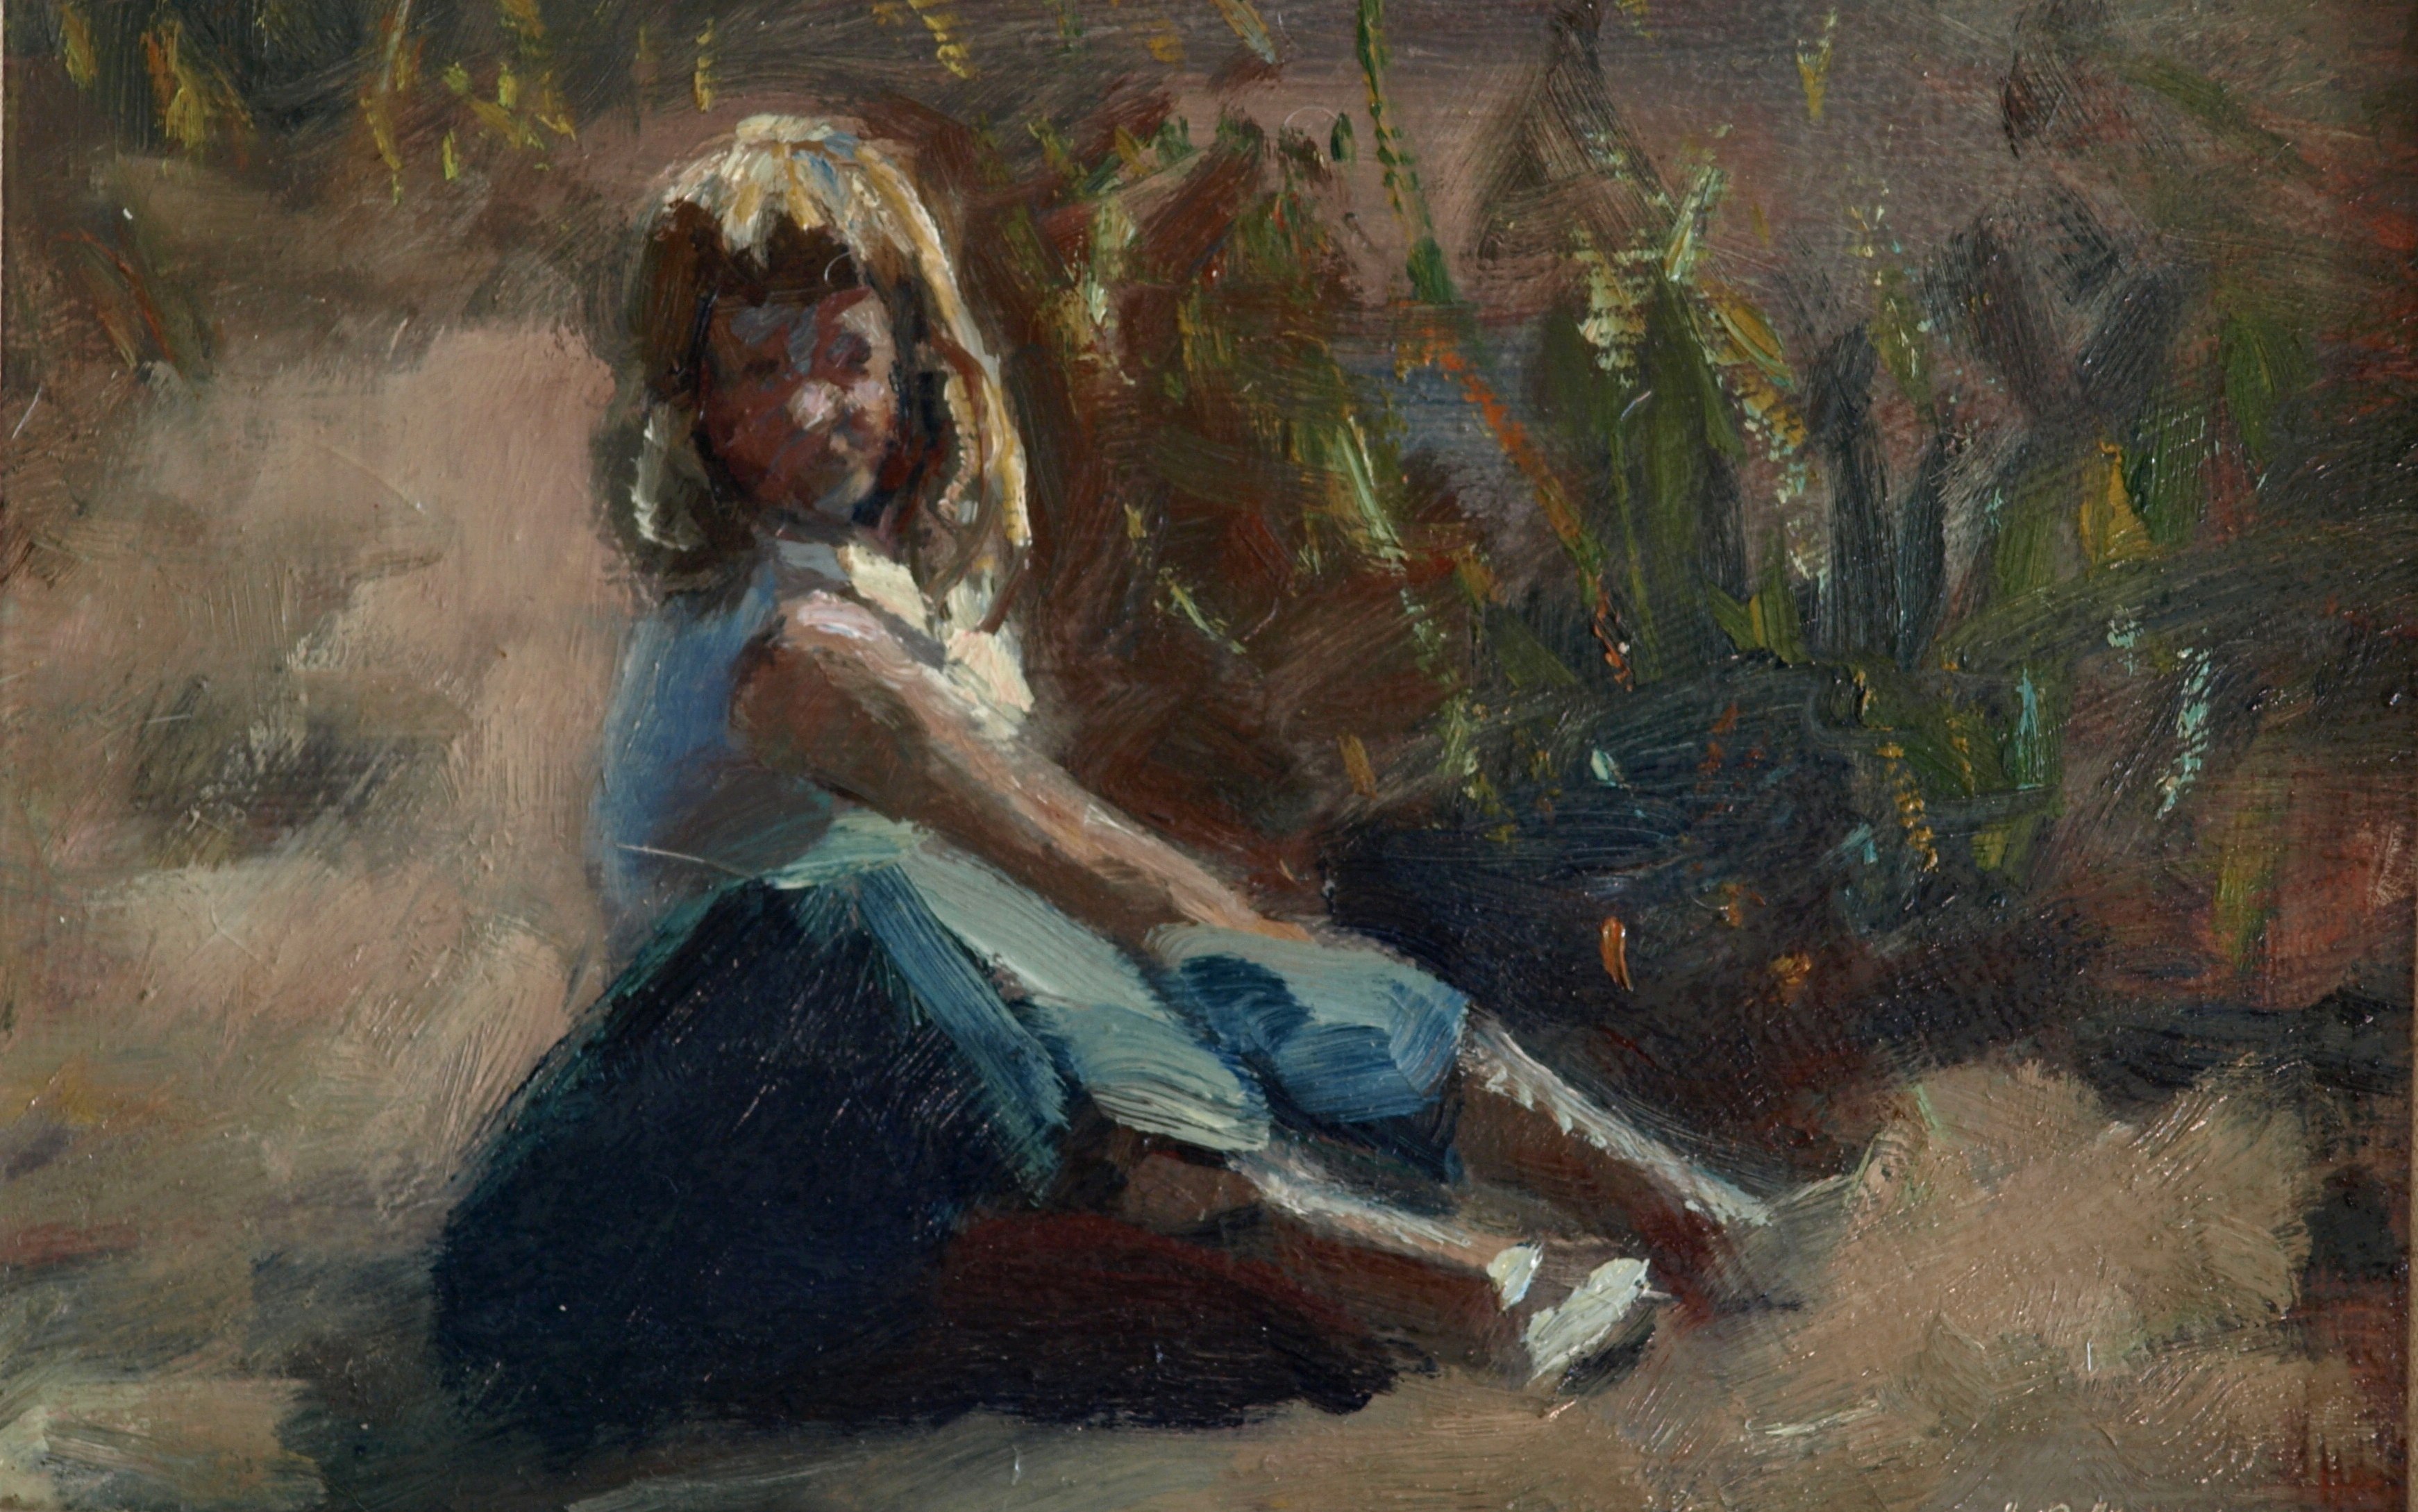 Girl at the Beach, Oil on Panel, 8 x 12 Inches, by Bernard Lennon, $225